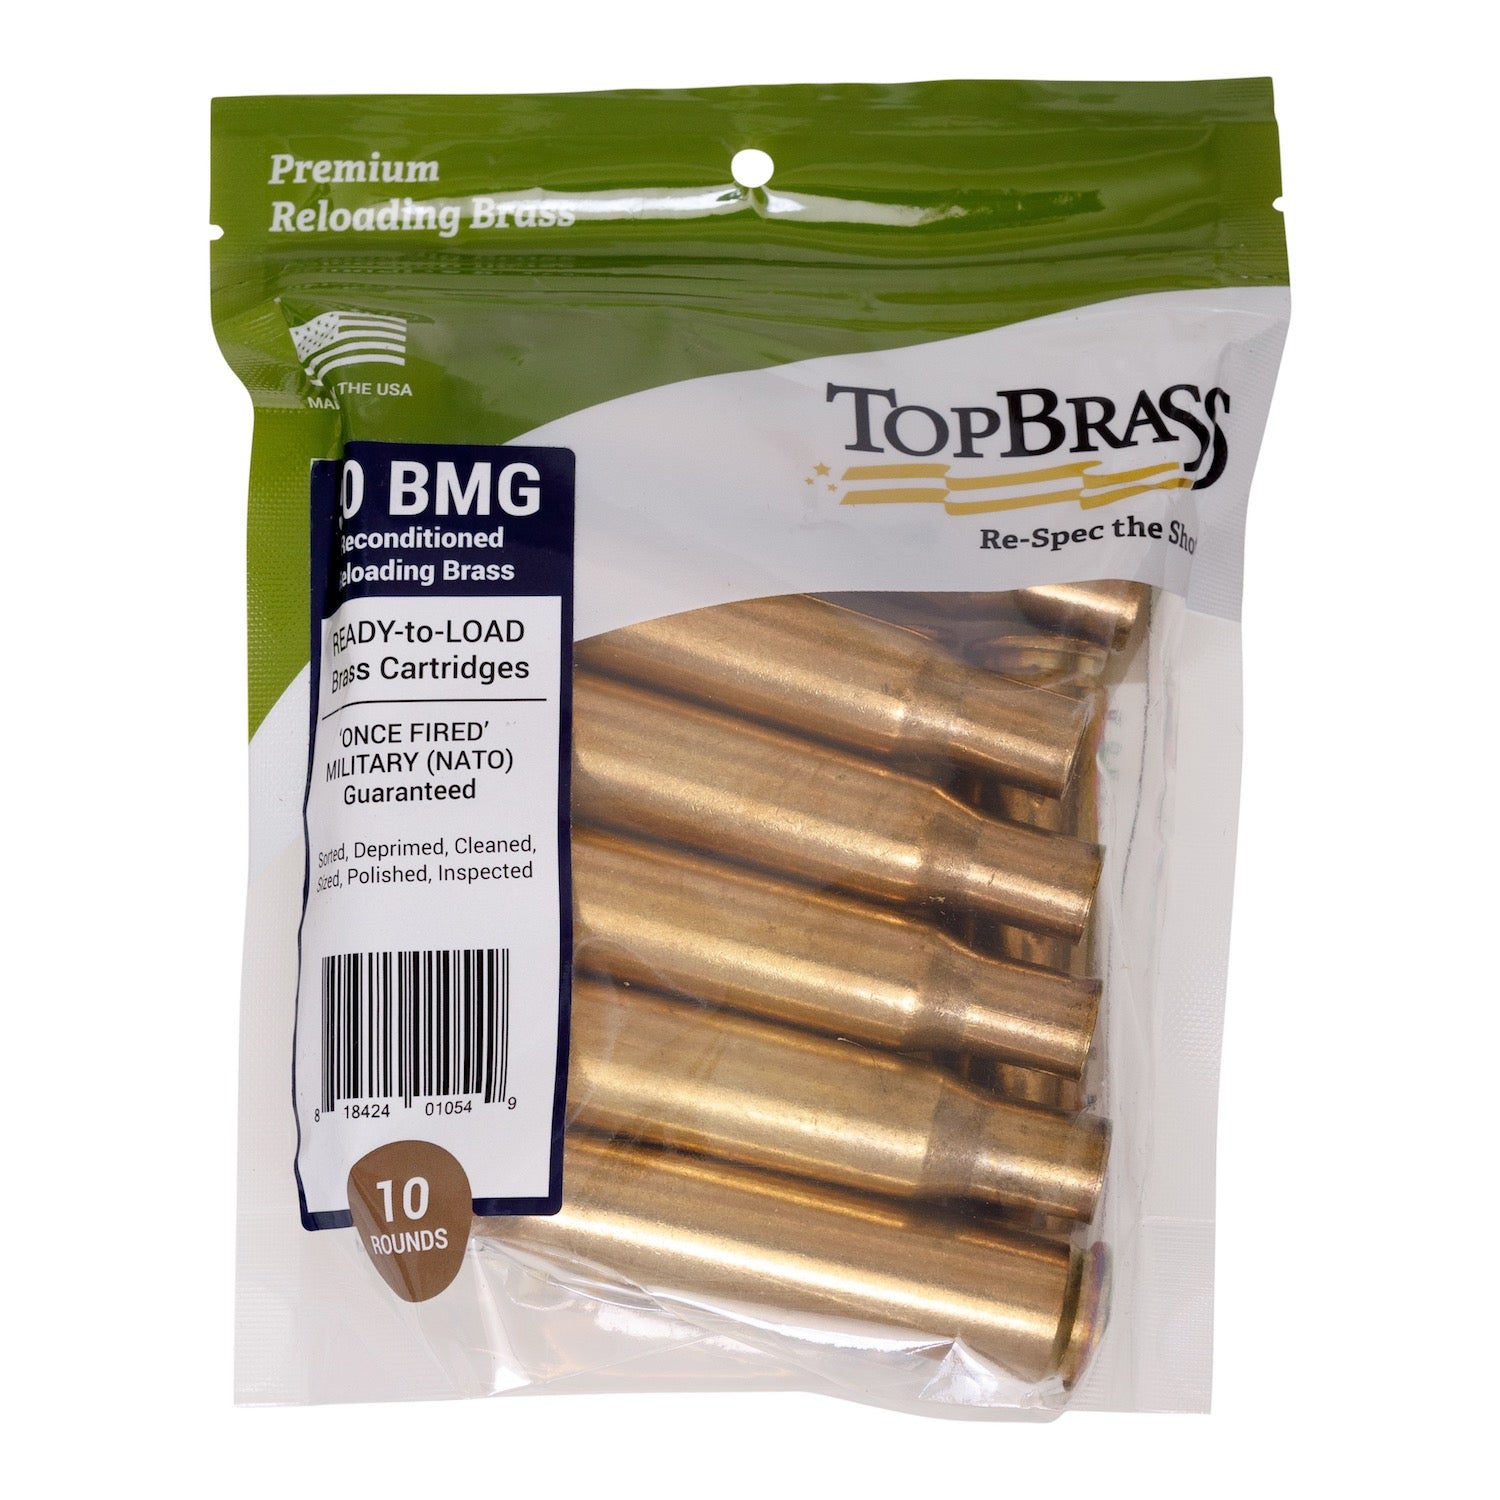 50 BMG Brass (Processed)  Top Brass, Inc. – Top Brass Reloading